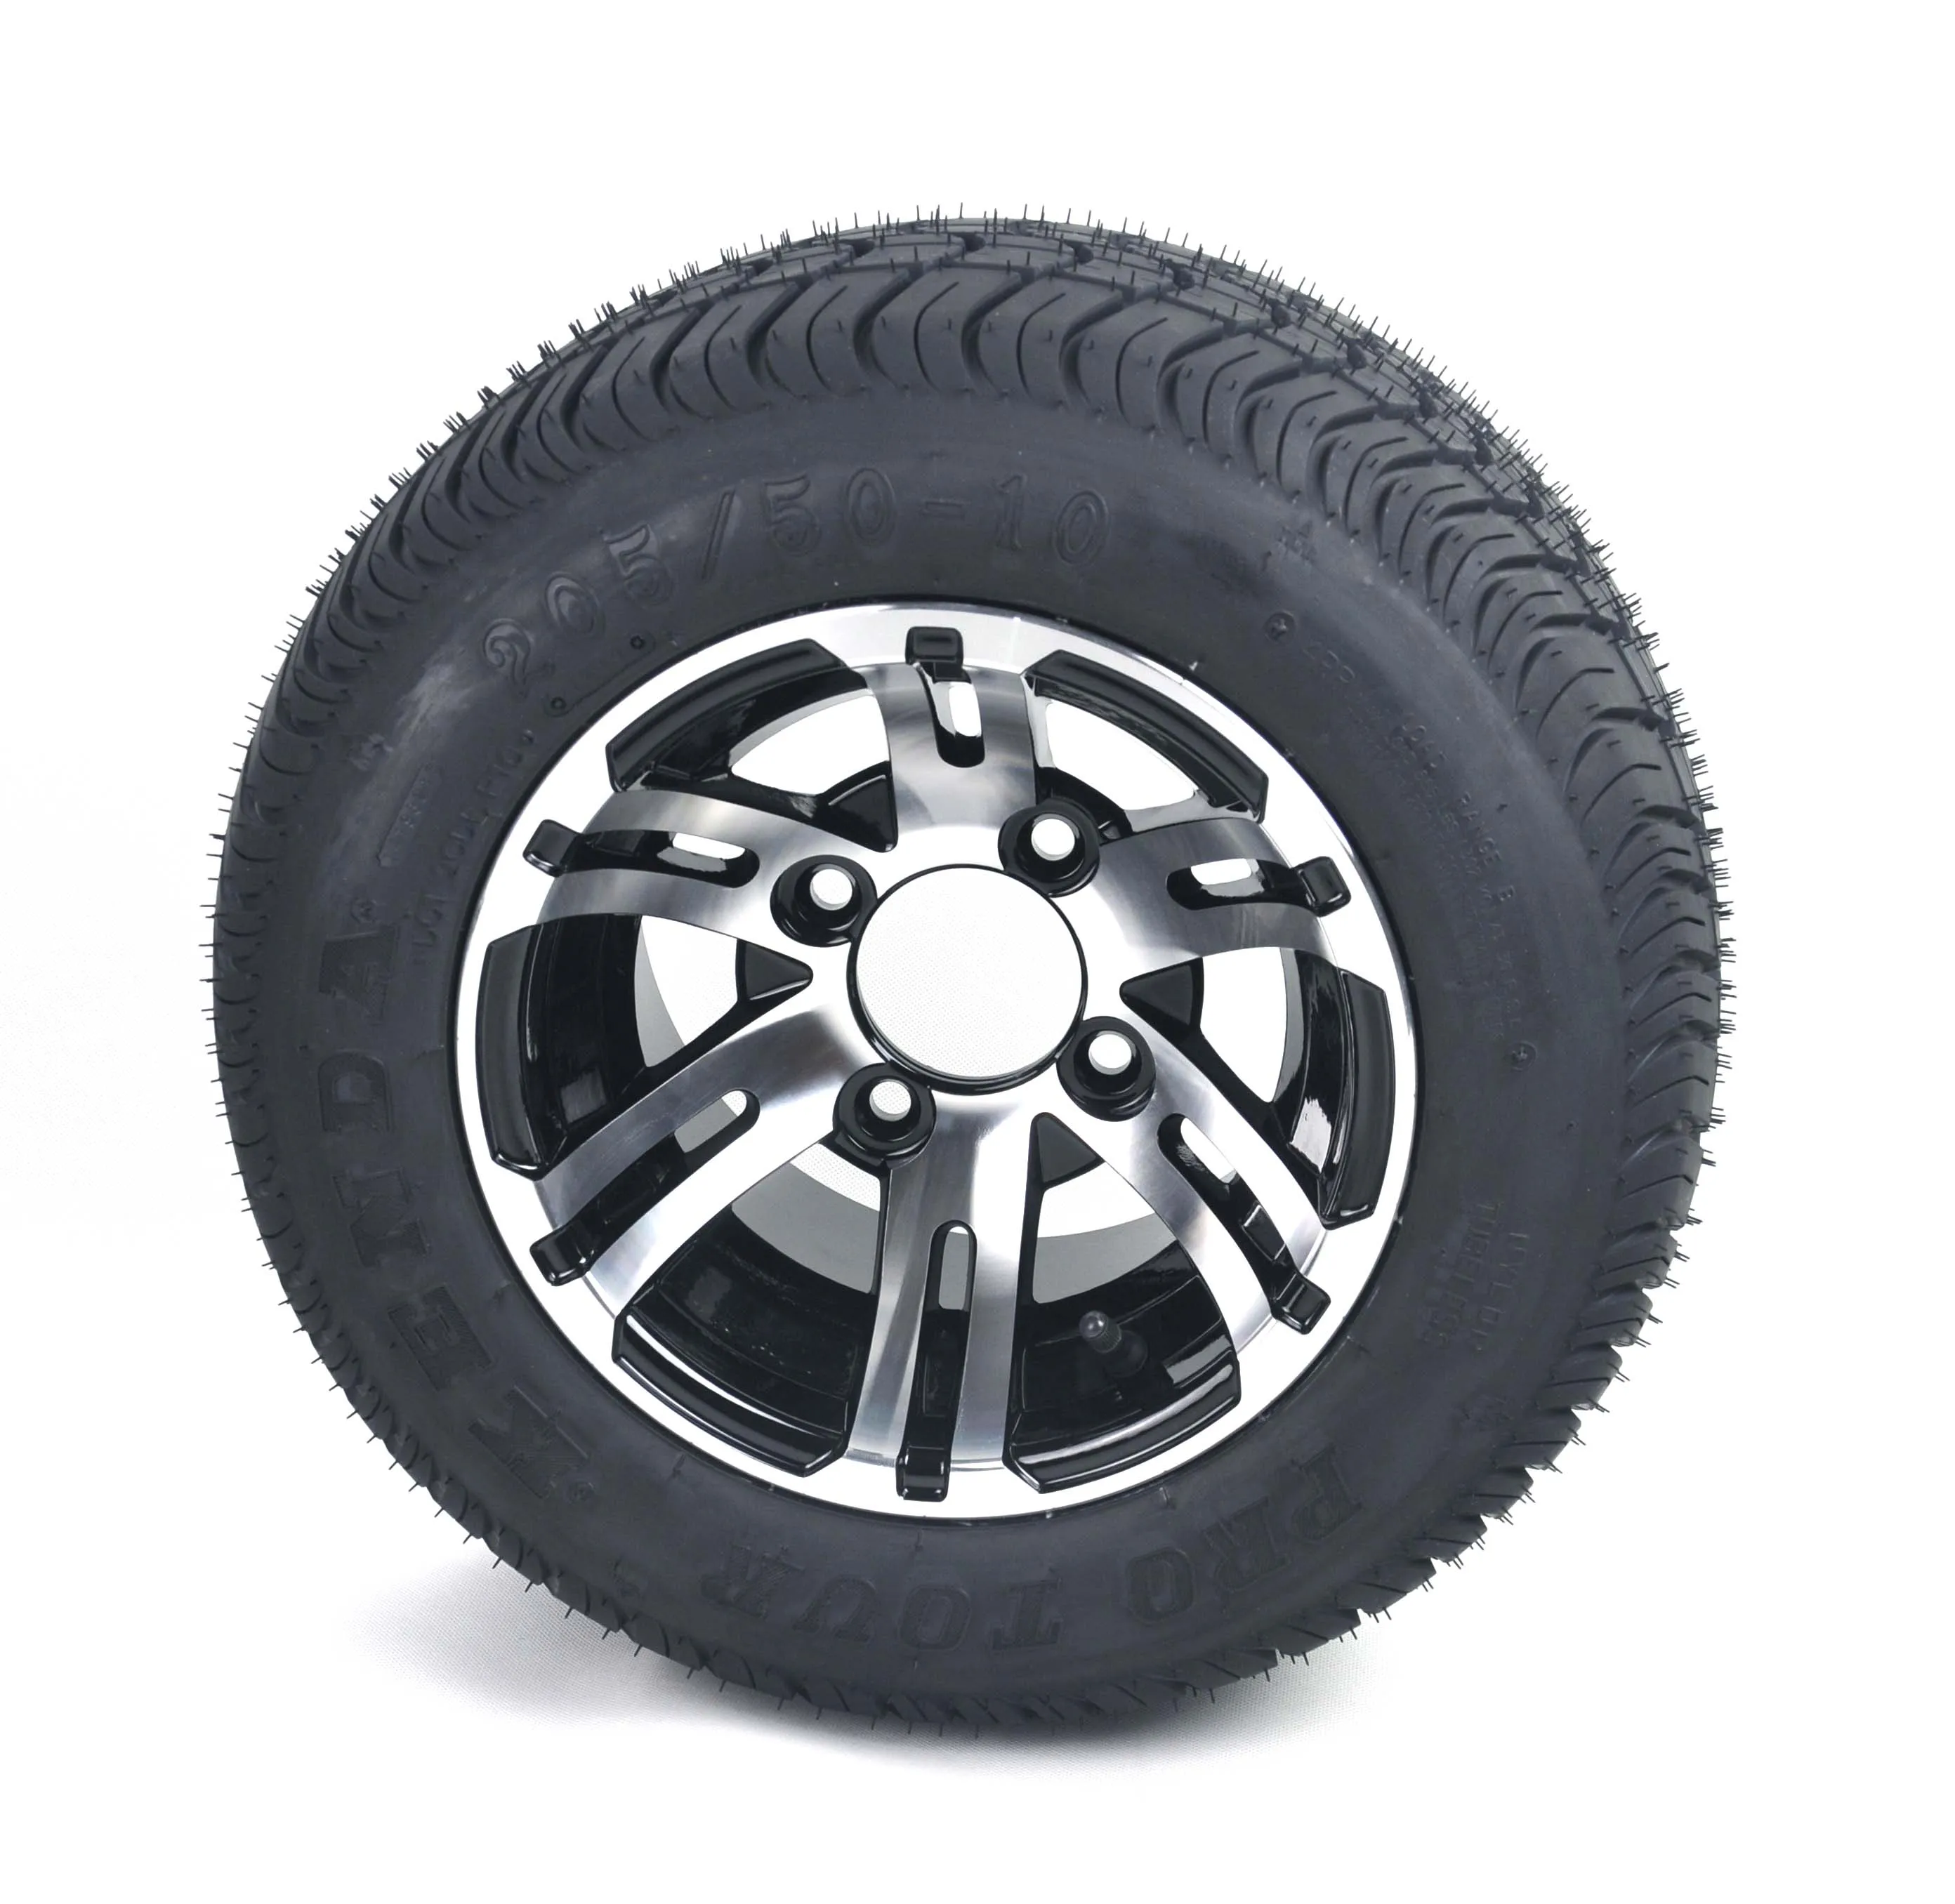 

Source factory products 205/50-10 Aluminium alloy rim GOLF tire